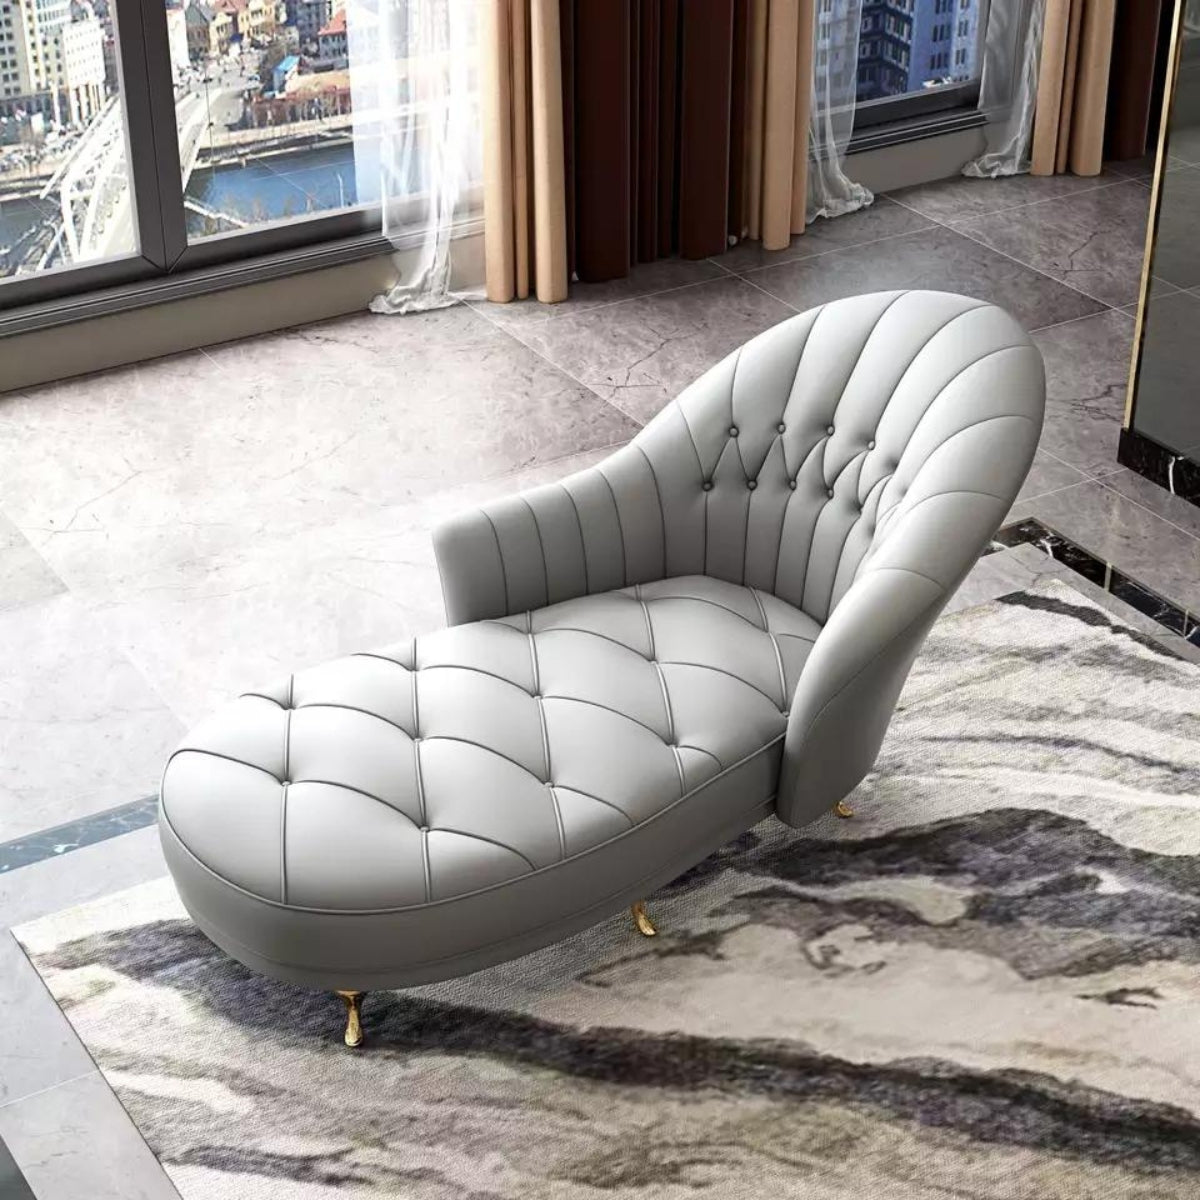 Luxury-chaise-grey-leather-elegant-interior-australia-2